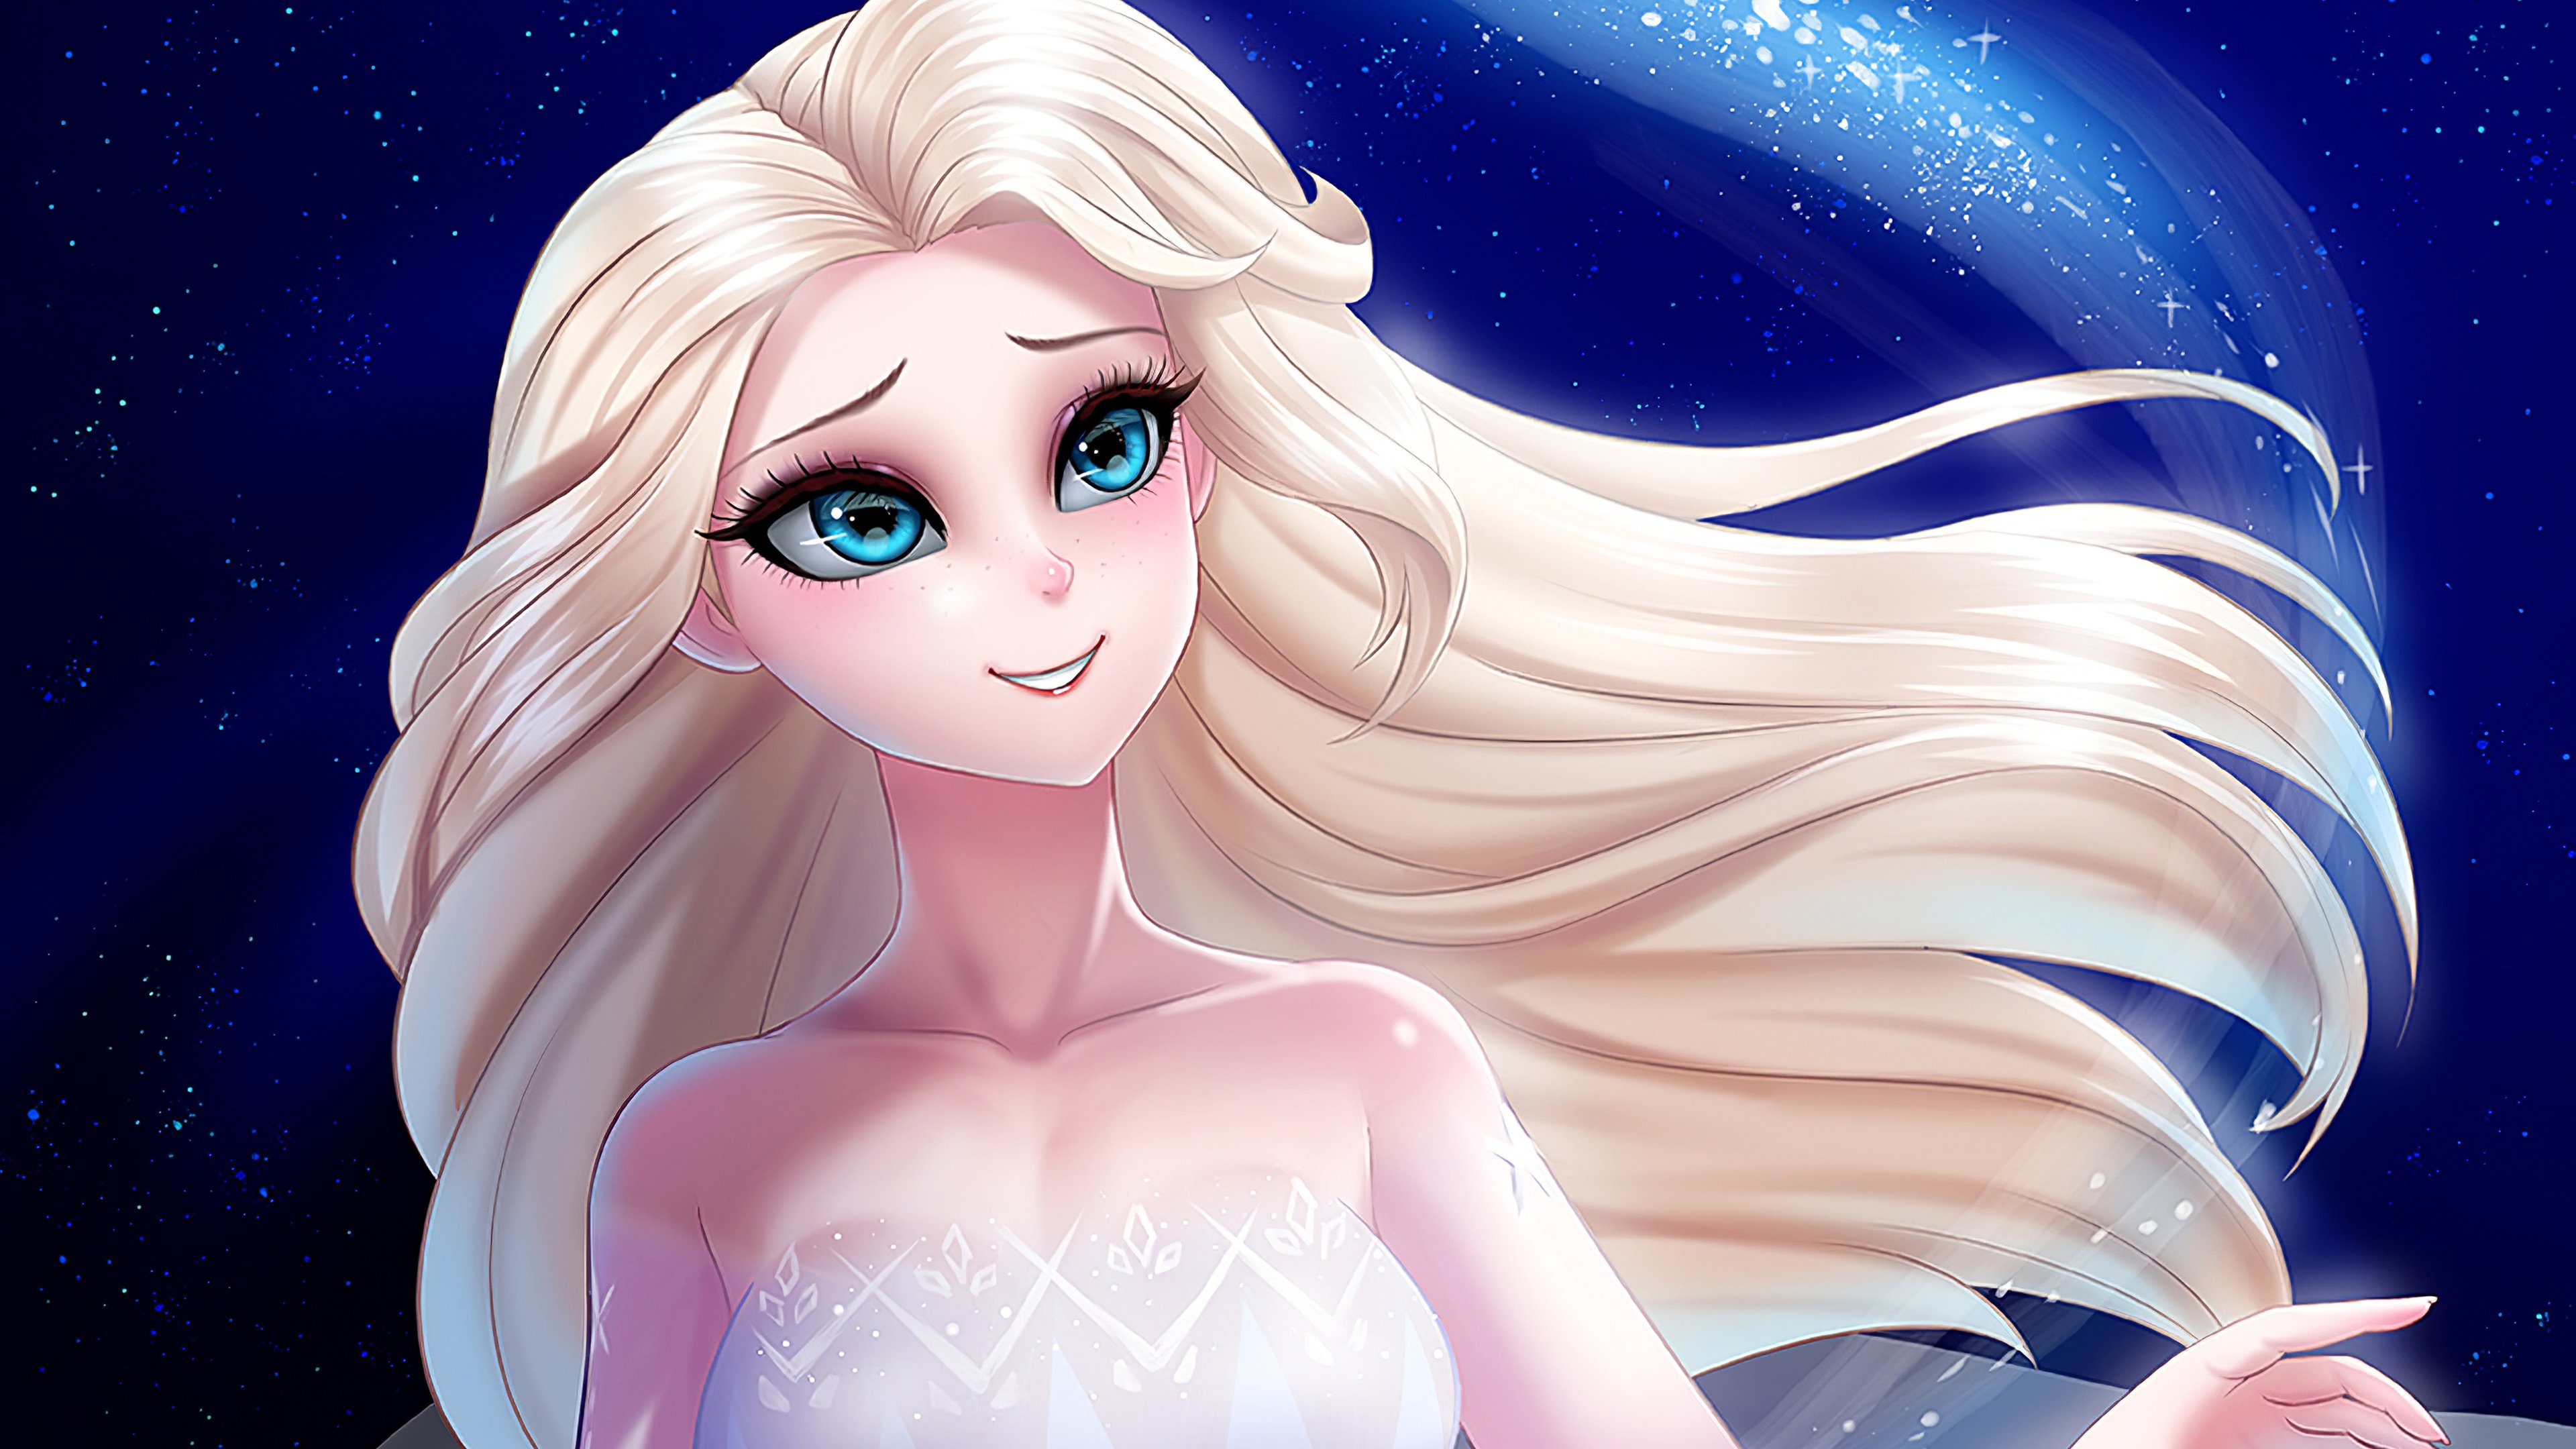 Free download Frozen 2 4k Ultra HD Wallpaper by racoonkun [3840x2160] for your Desktop, Mobile & Tablet. Explore Elsa Anime Wallpaper. Elsa Wallpaper, Queen Elsa Wallpaper, Frozen Fever Elsa Wallpaper